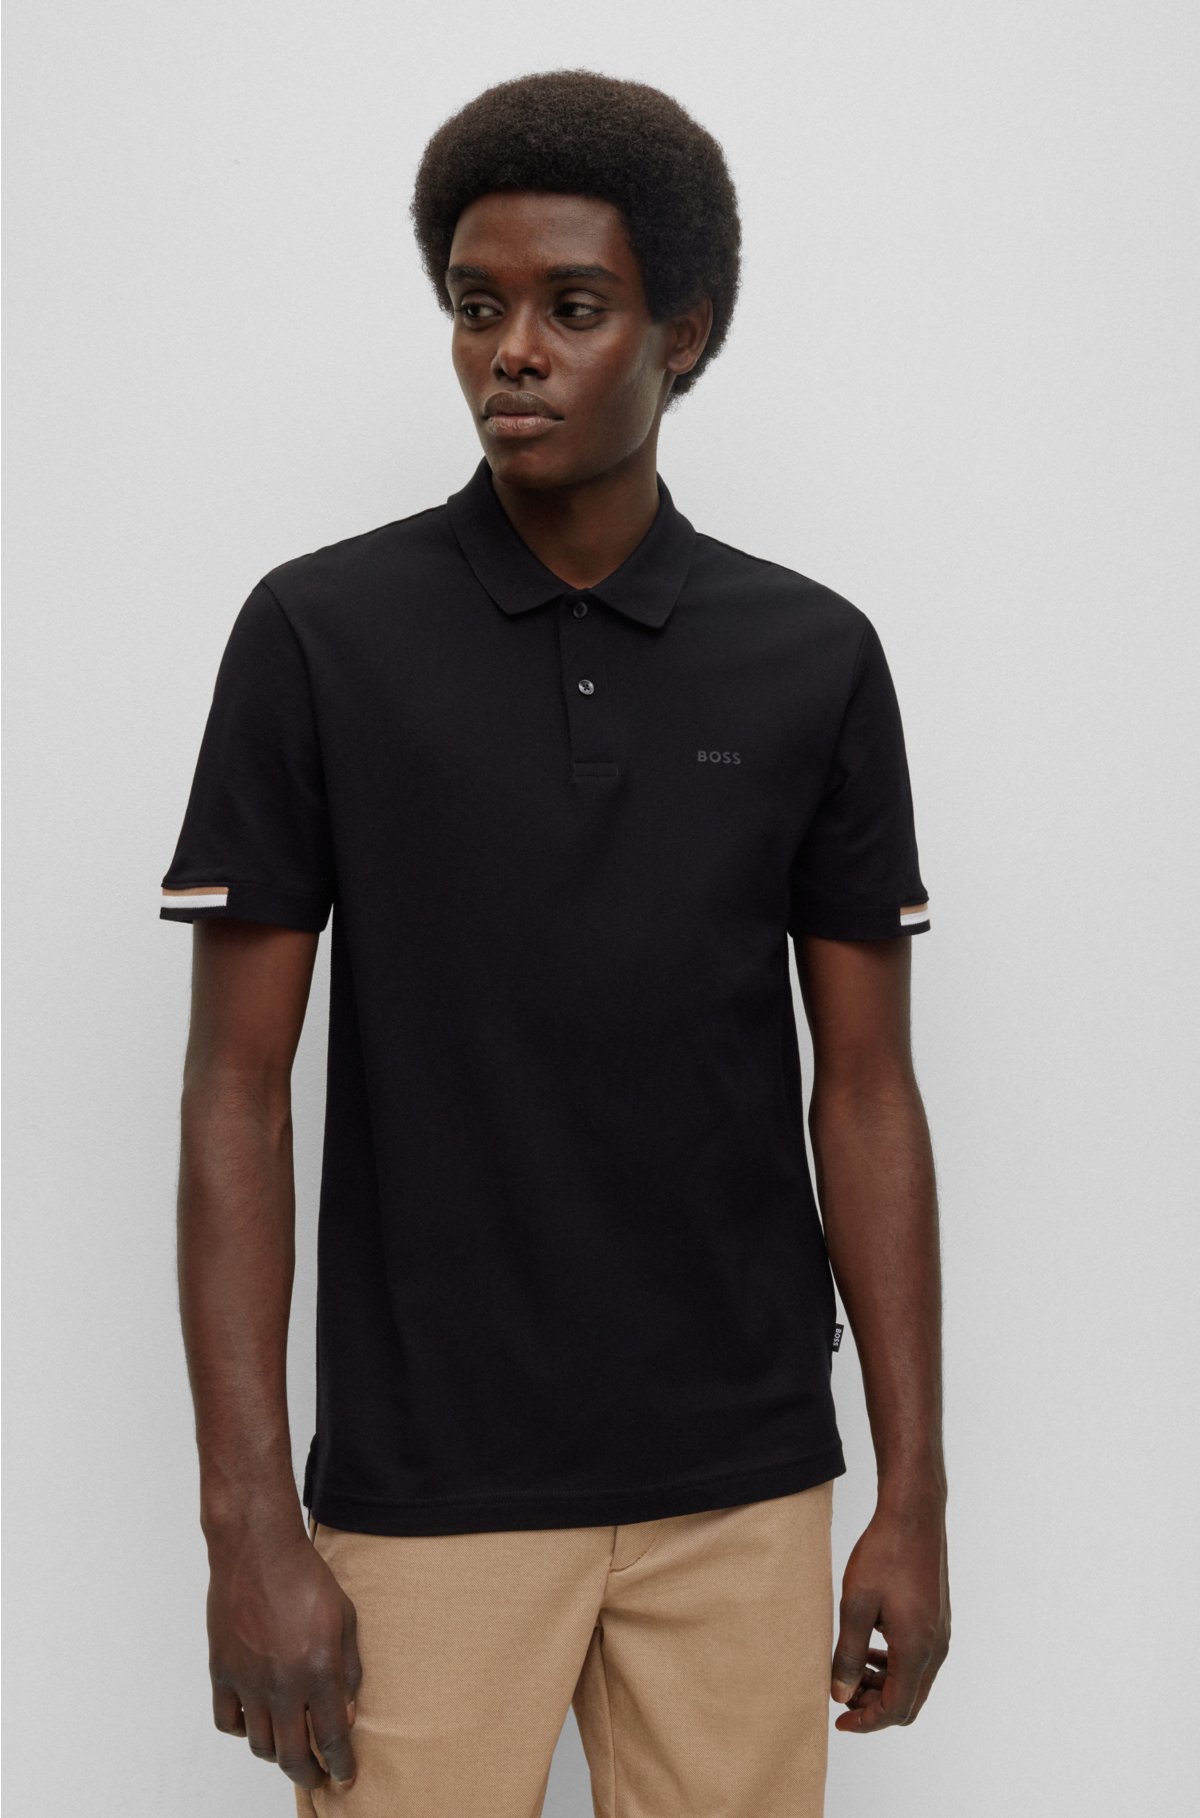 vandfald kran Remission BOSS - Regular-fit polo shirt with rubberized logo